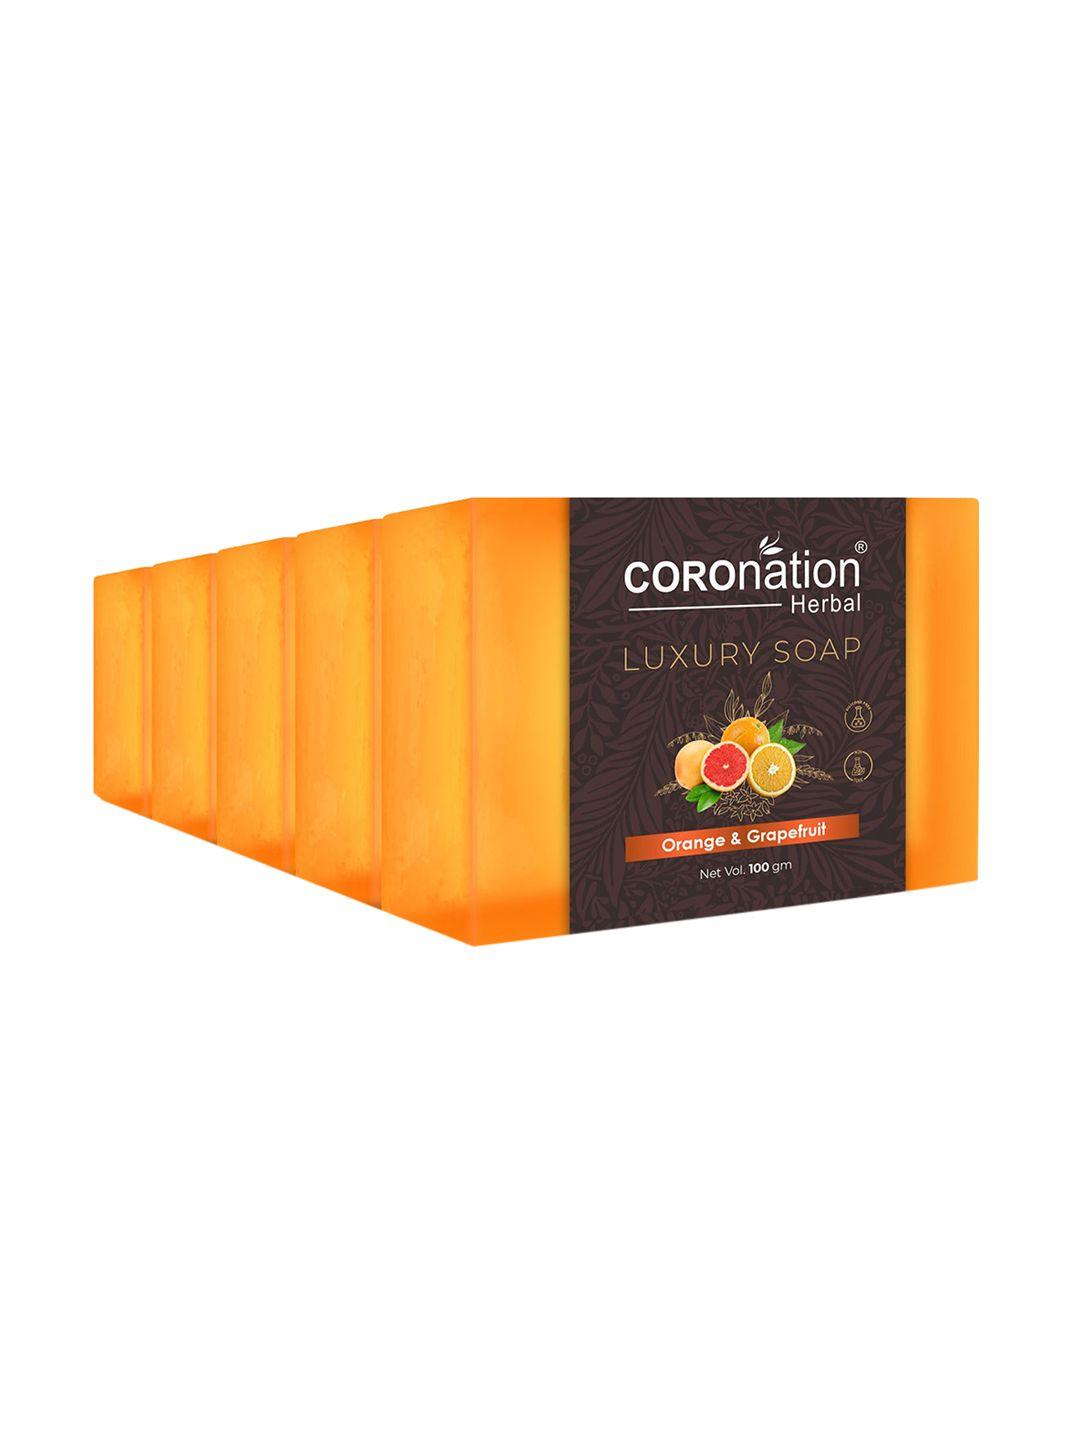 coronation herbal set of 5 orange & grapefruit luxury soaps - 100g each